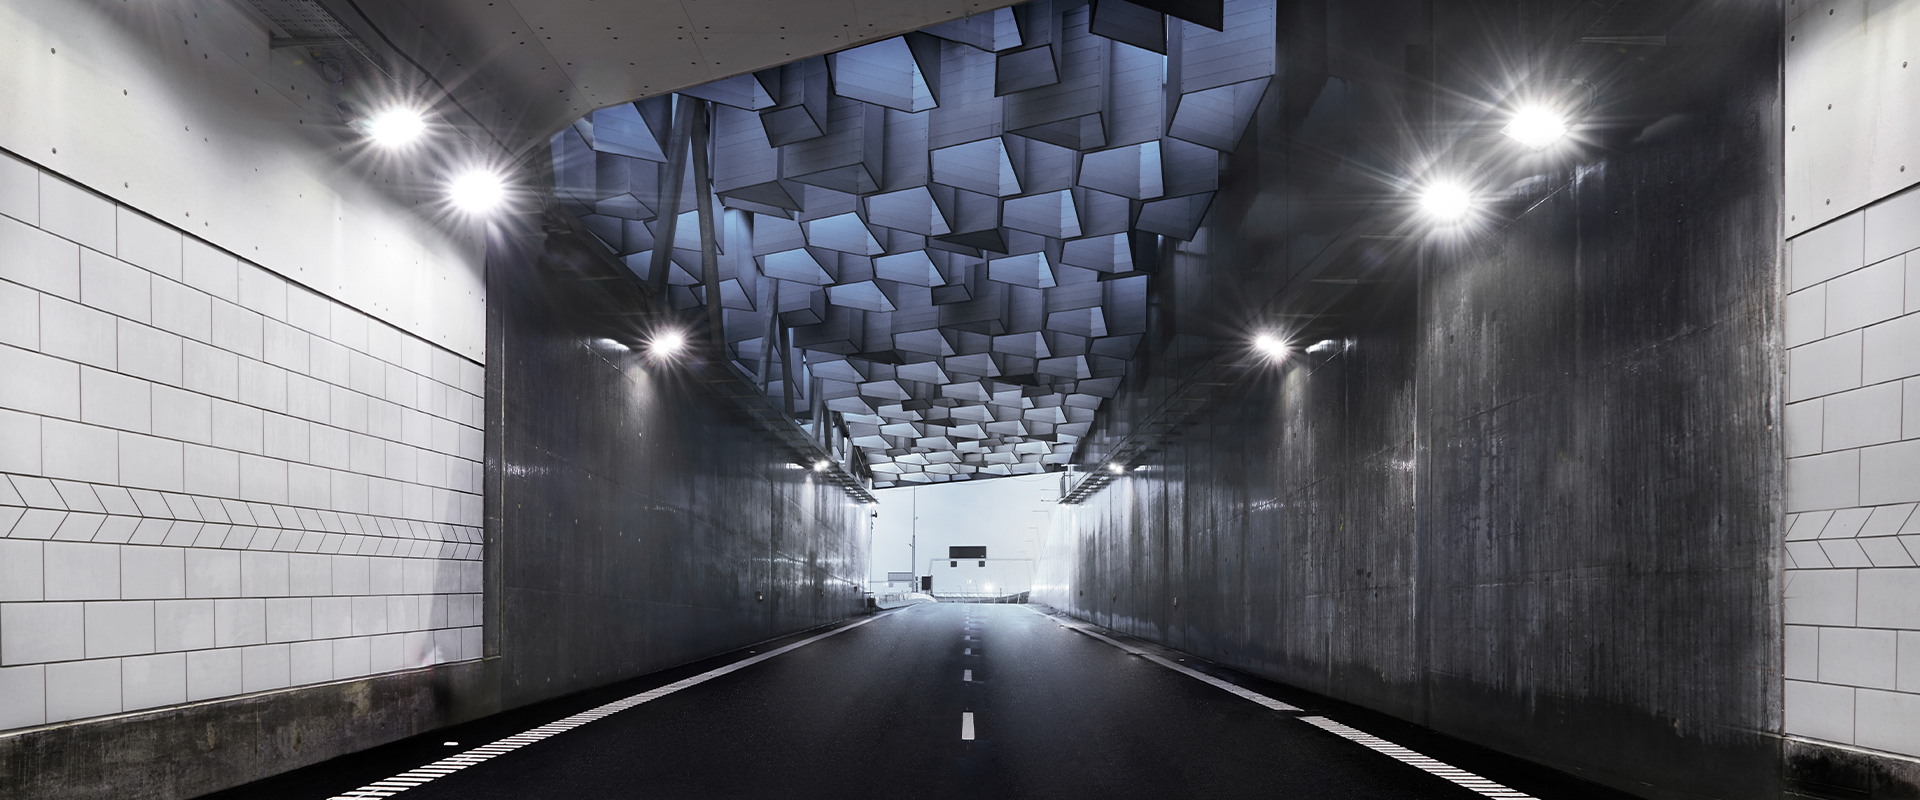 Faro LED stradale per gallerie